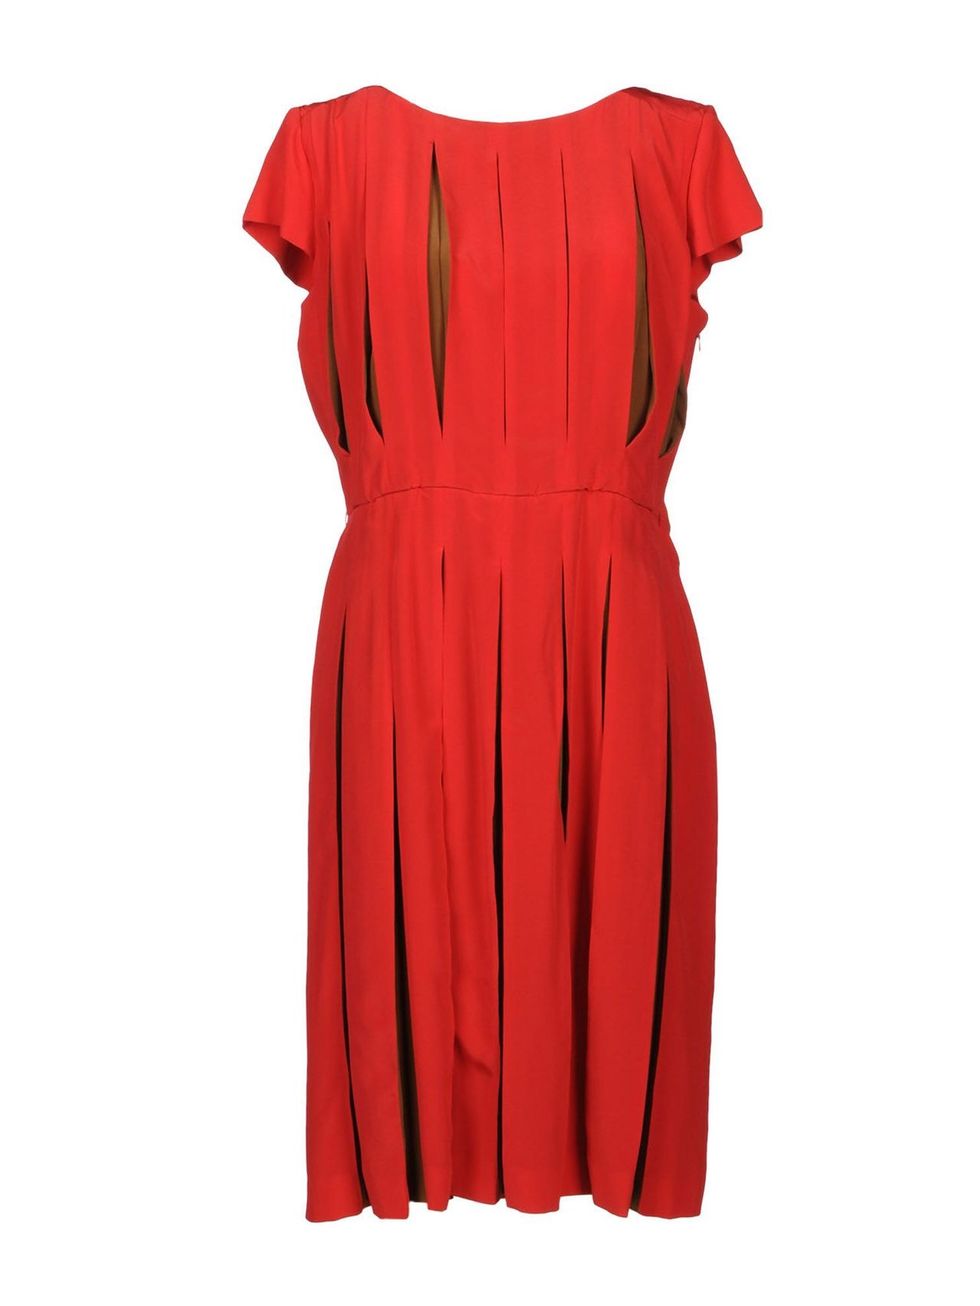 Sleeve, Dress, Textile, Red, One-piece garment, Orange, Day dress, Pattern, Maroon, Fashion design, 